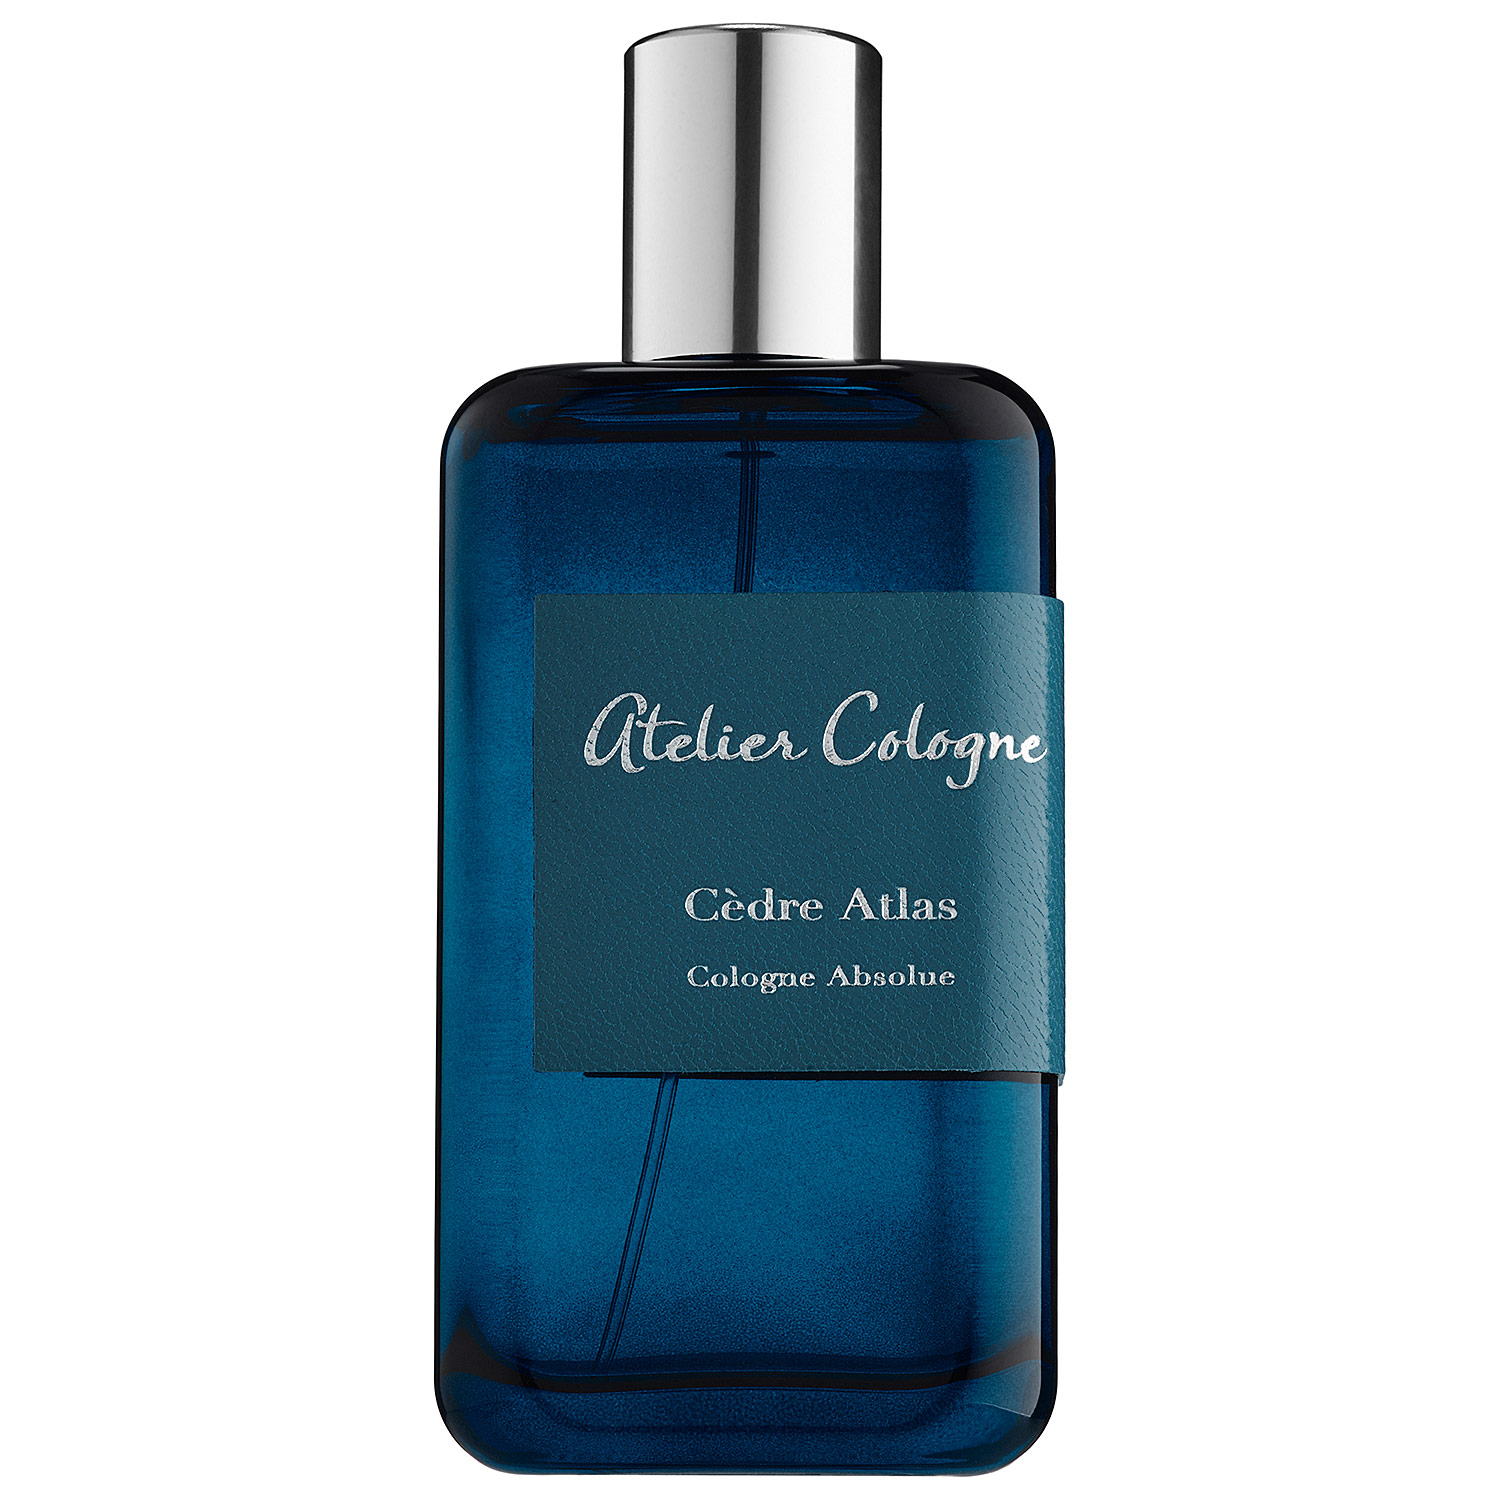 Купить Одеколон Atelier Cologne, Atelier Cologne Cedre Atlas 100.0ml, Франция